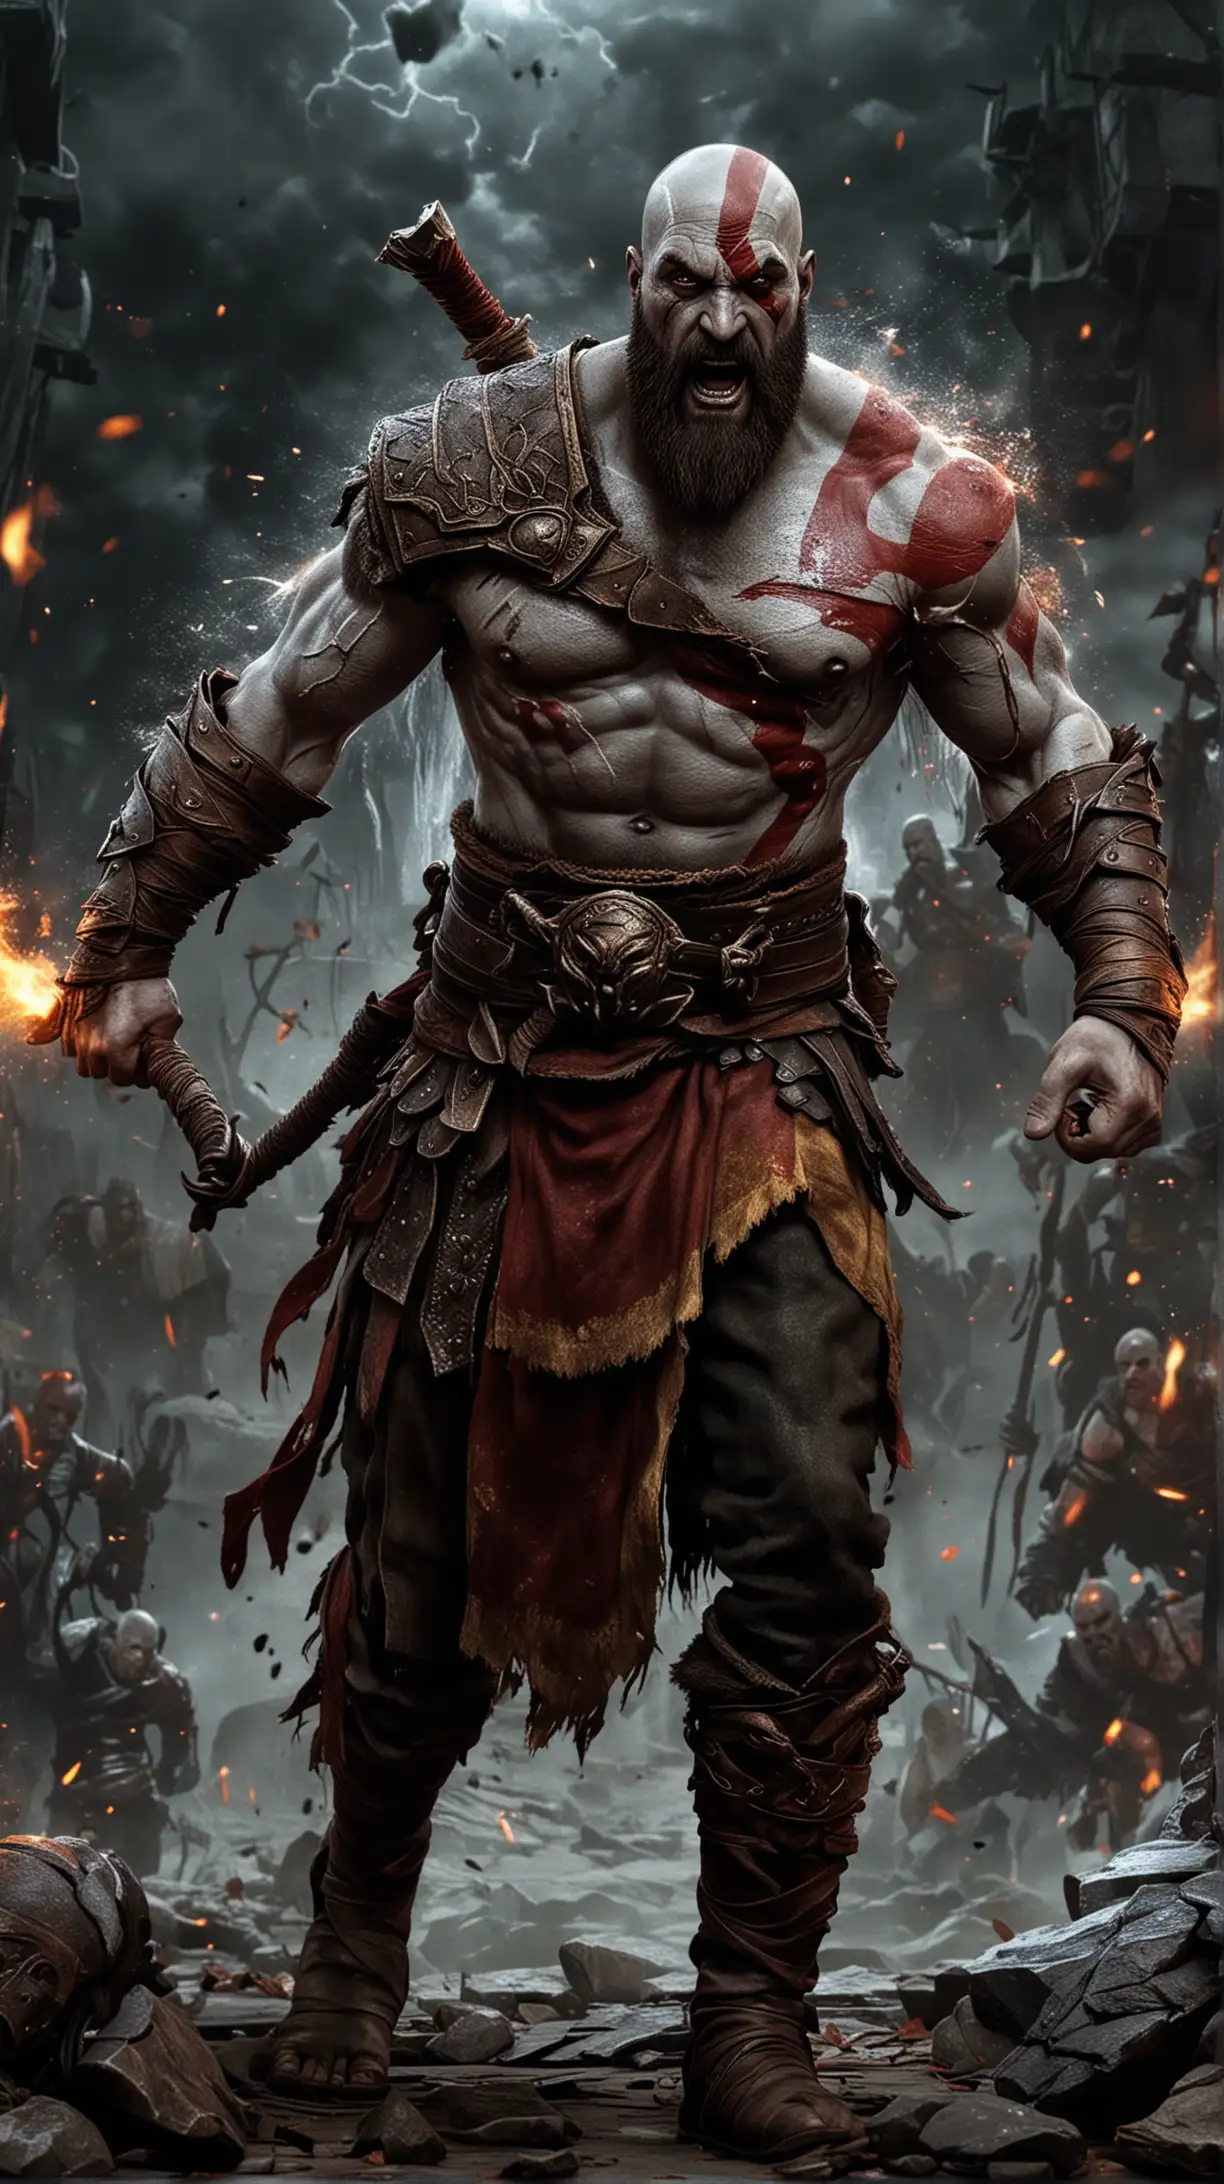 Kratos Epic Battle Dramatic Lighting in Extreme Detailed Digital Art